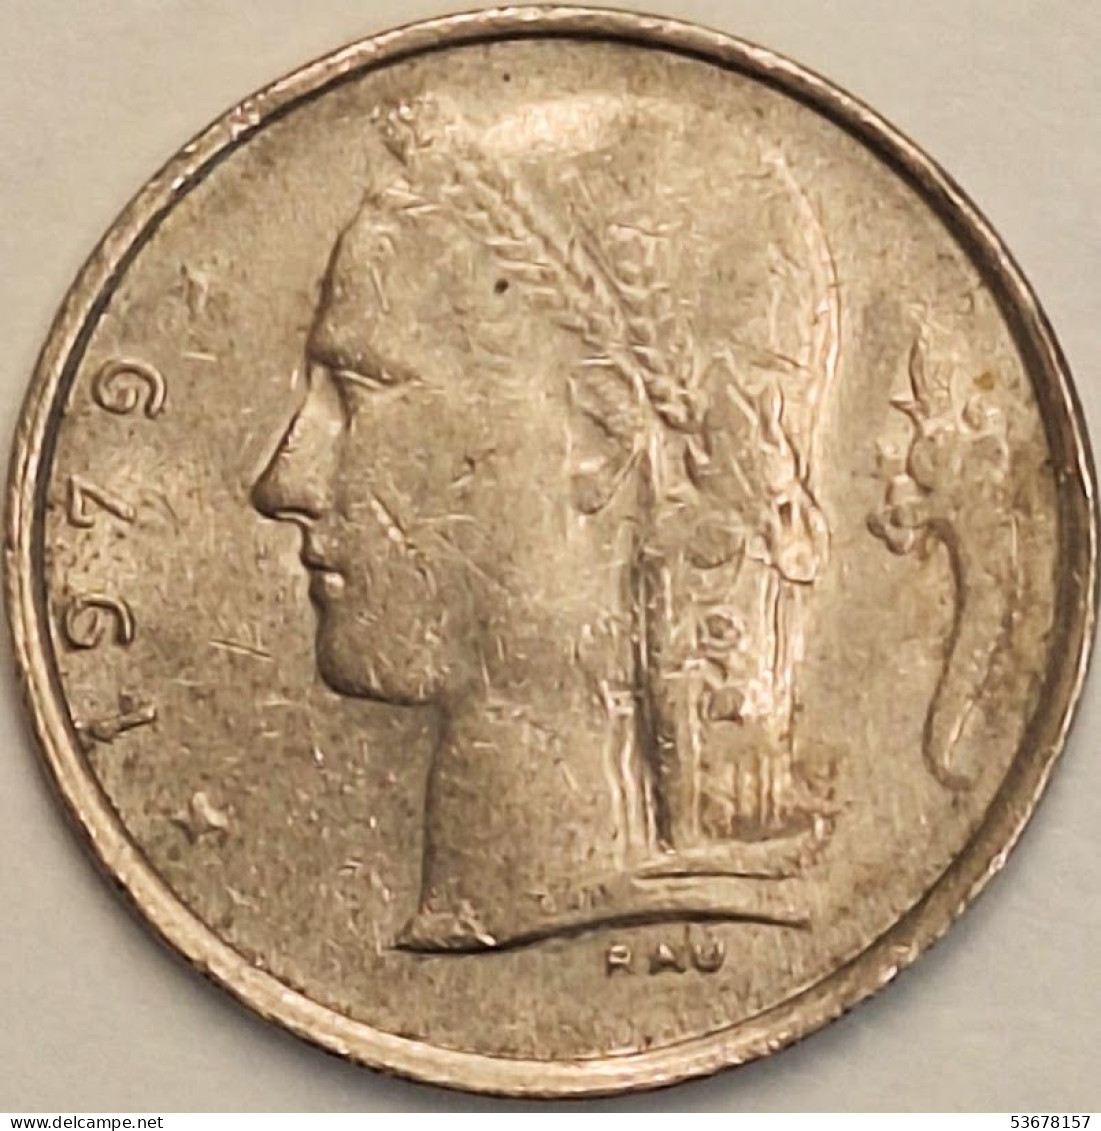 Belgium - Franc 1979, KM# 142.1 (#3122) - 1 Franc